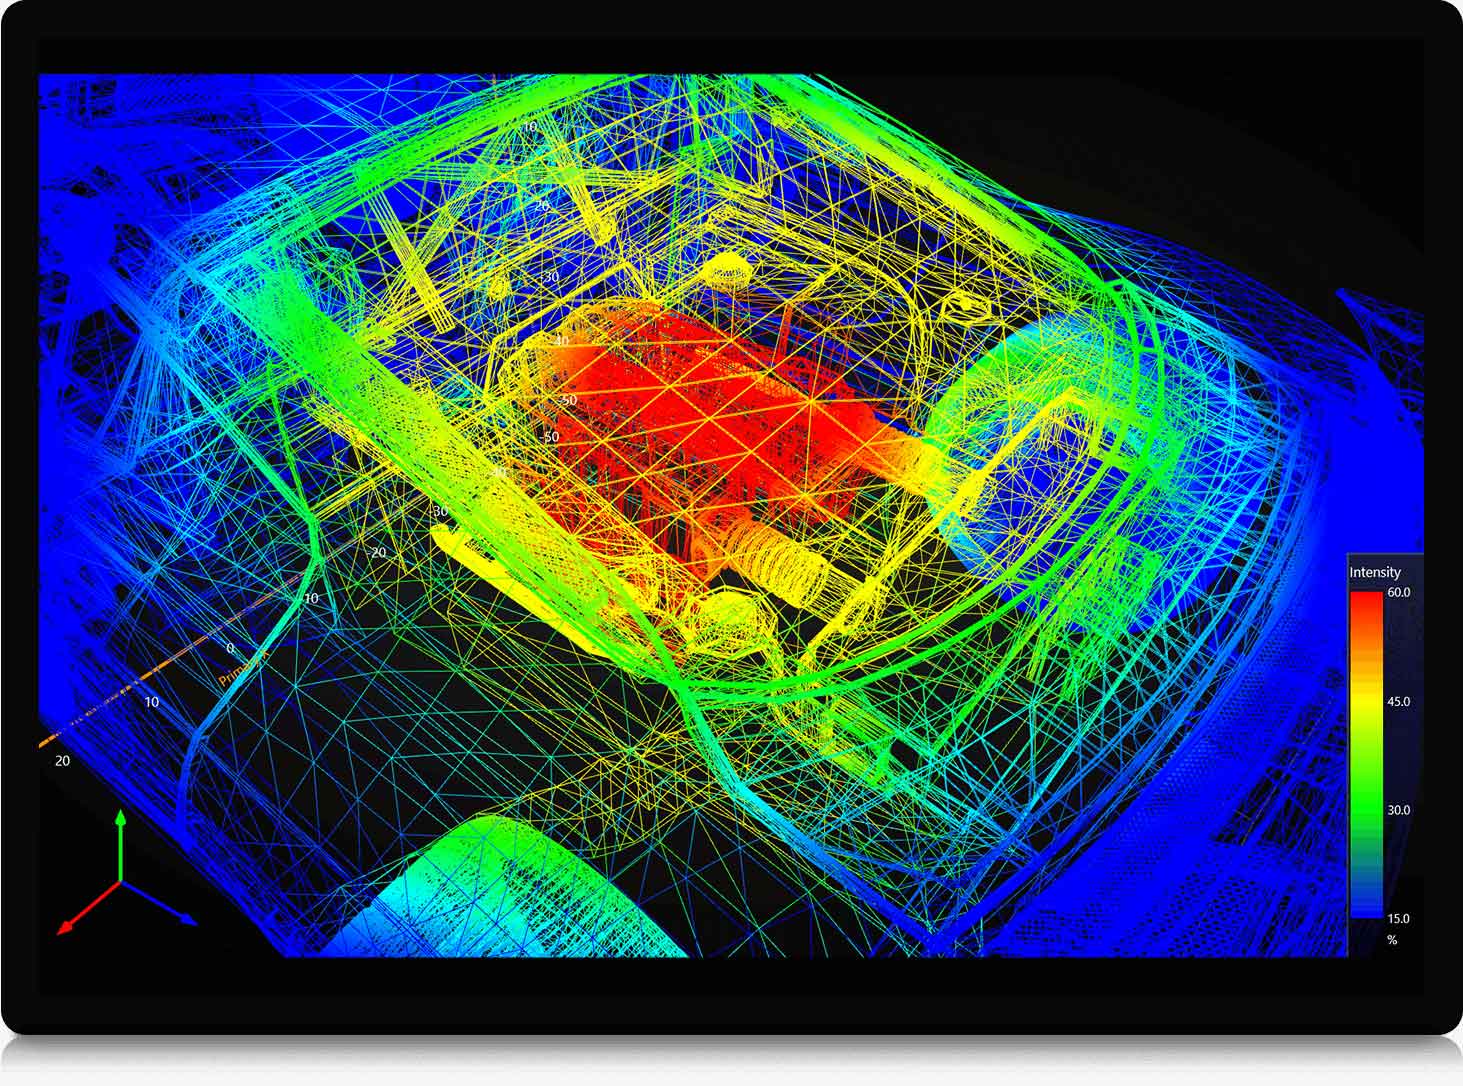 LiDAR Data Visualization mesh model car wireframe